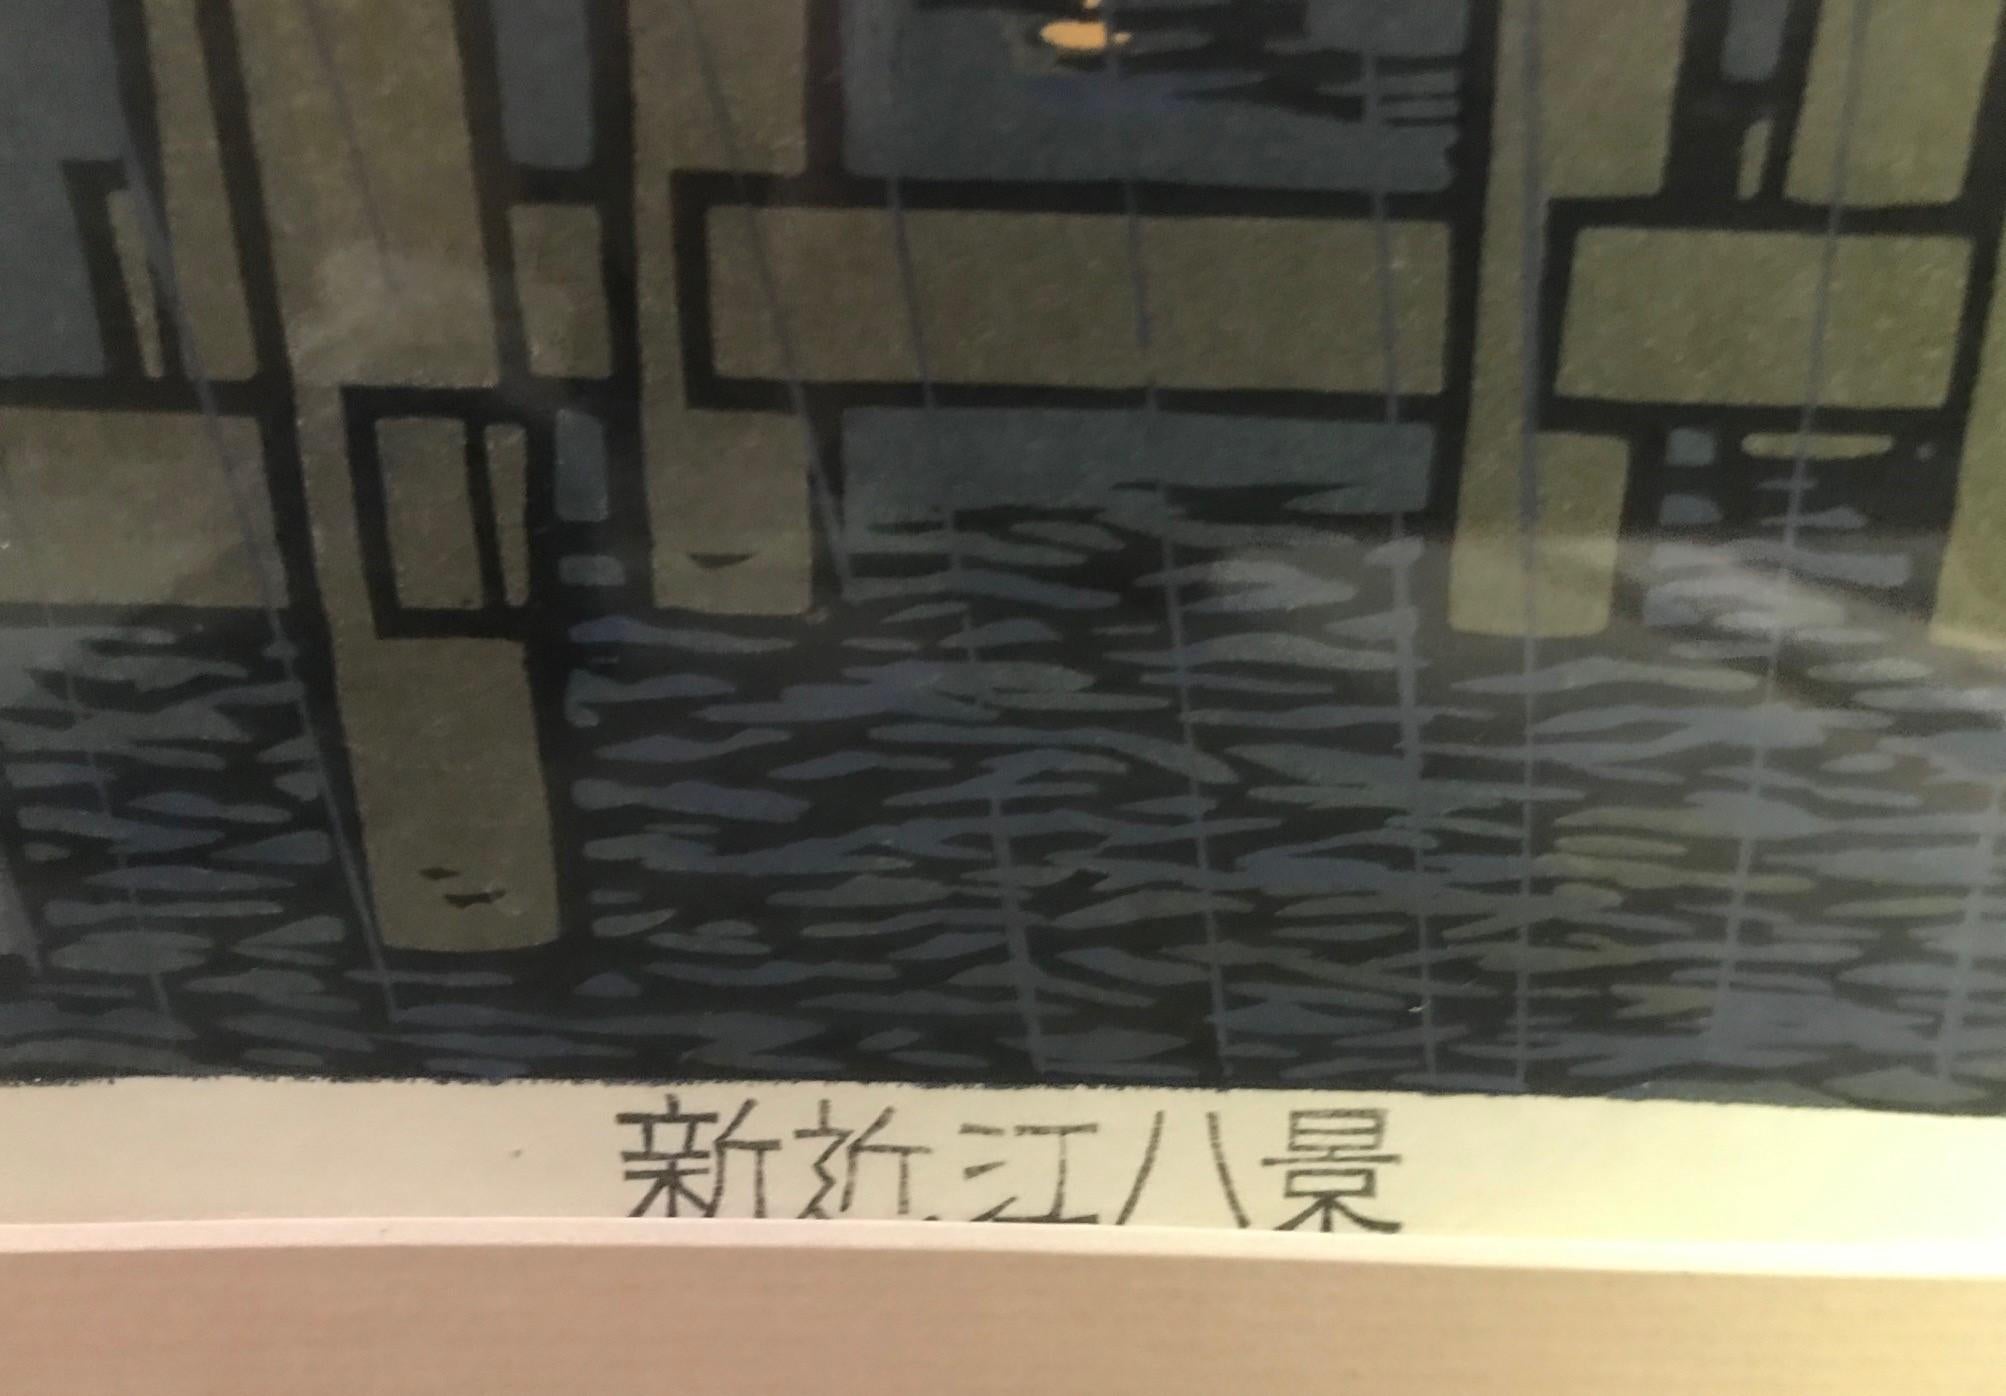 Katsuyuki Nishijima Signed Limited Edition Japanese Woodblock Print Evening Rain In Good Condition In Studio City, CA